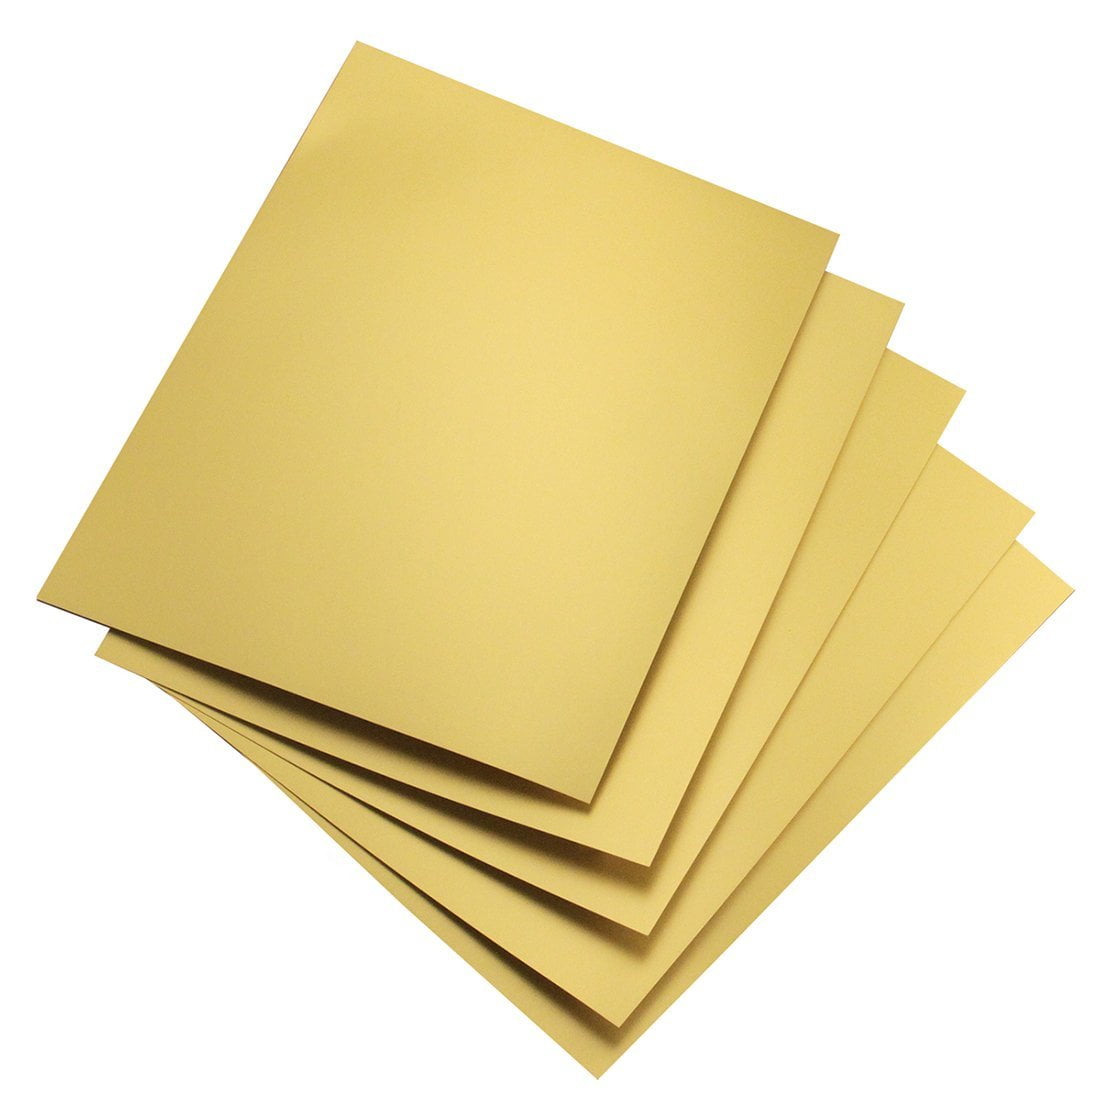 12x12 Metallic Mirror Board Sheets, 10 Pack Gold Cardstock Foil Board